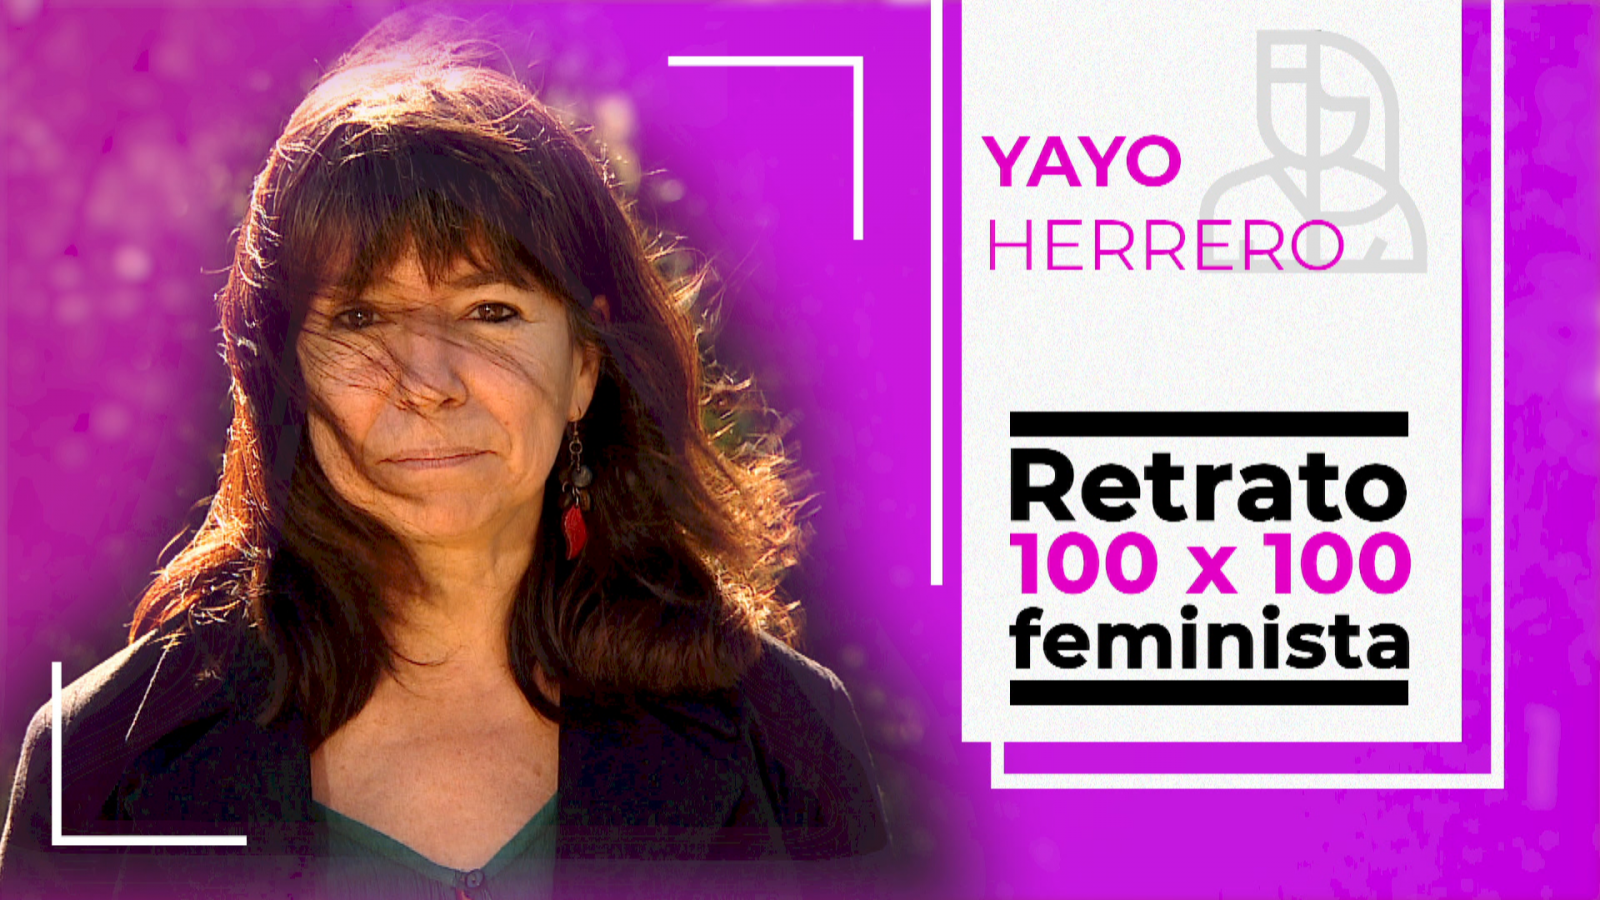 Objetivo Igualdad- Retrato 100 x 100 feminista: Yayo Herrero